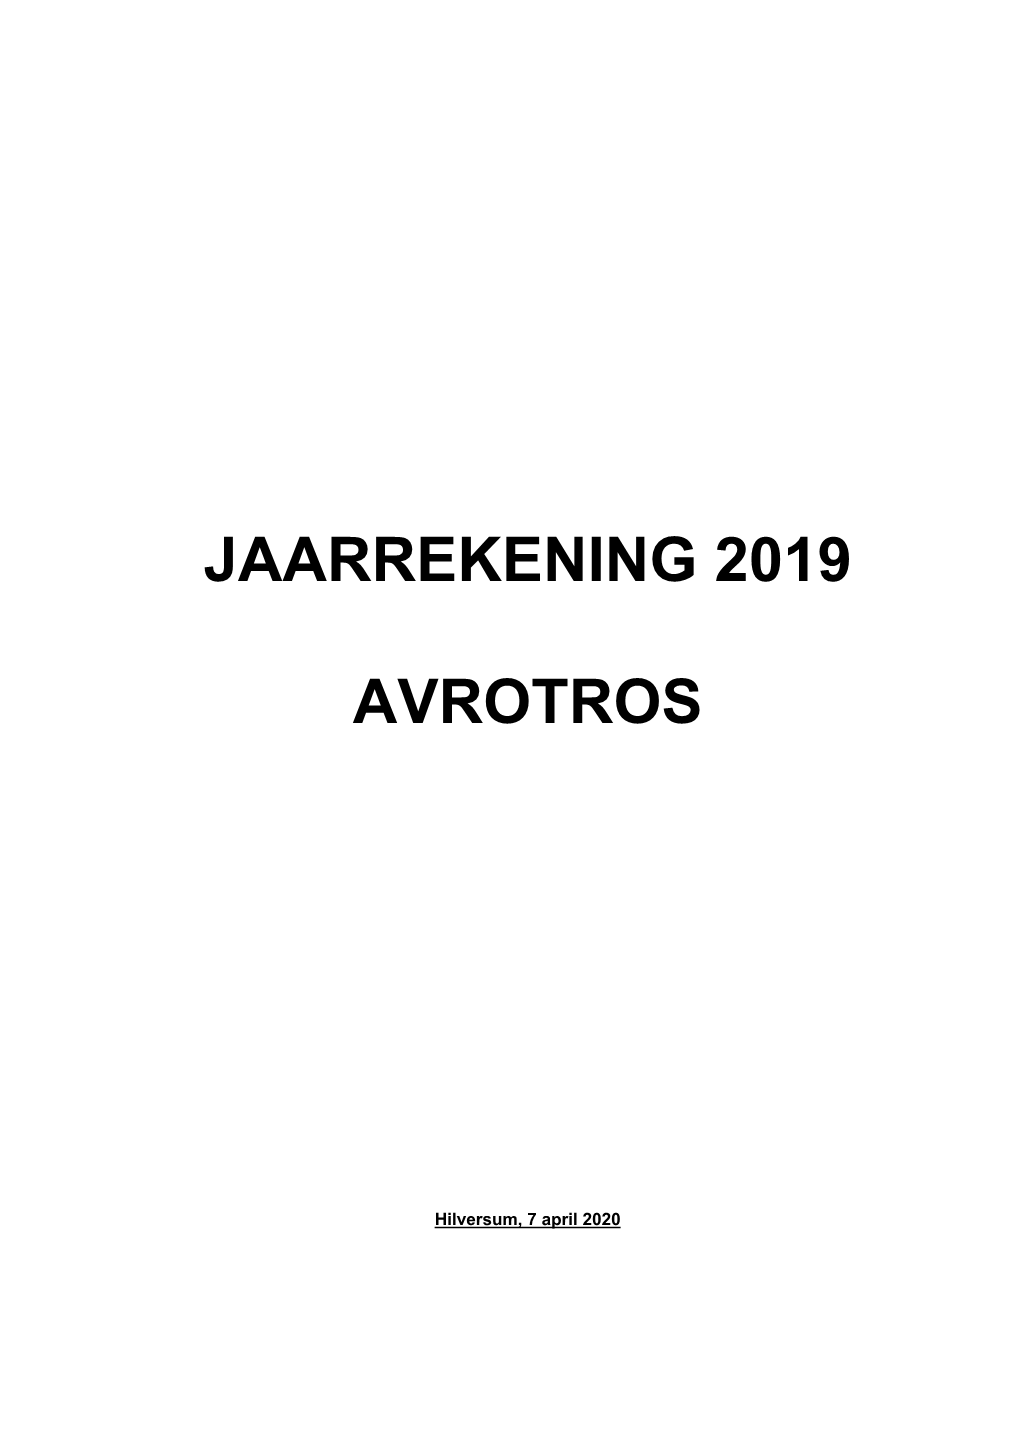 Jaarrekening 2019